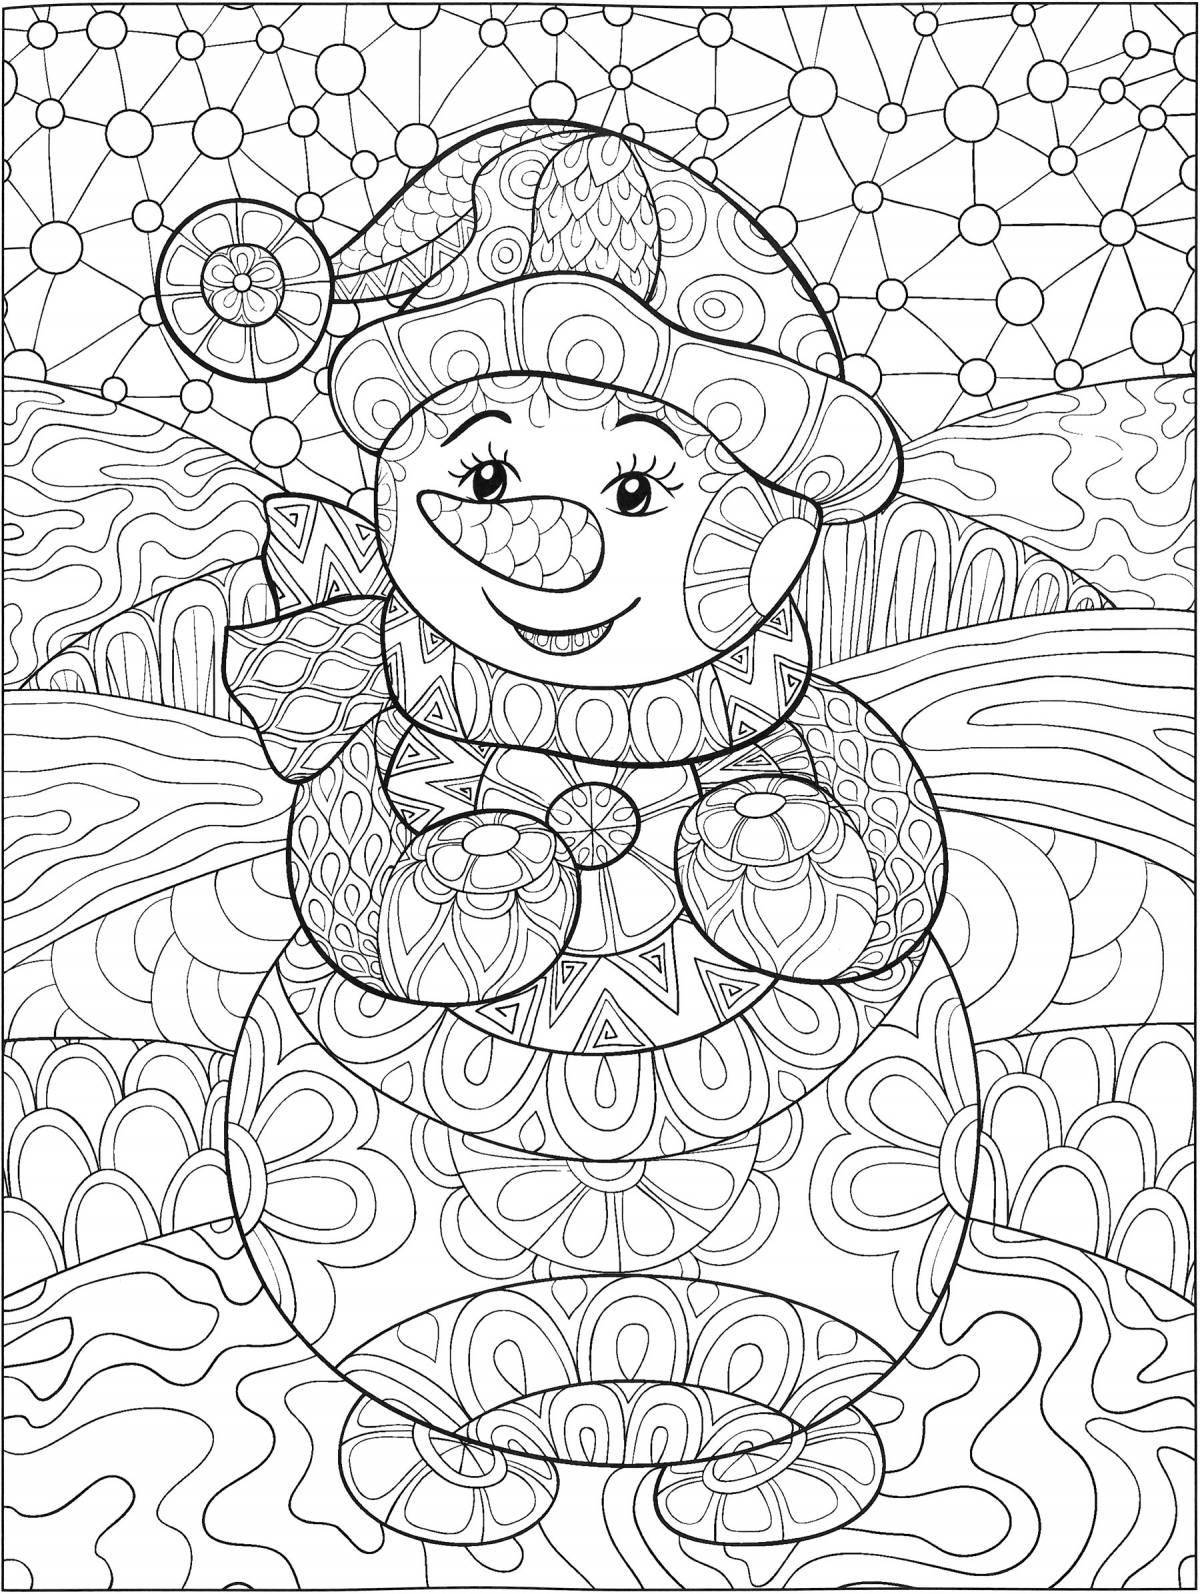 Live snowman antistress coloring book